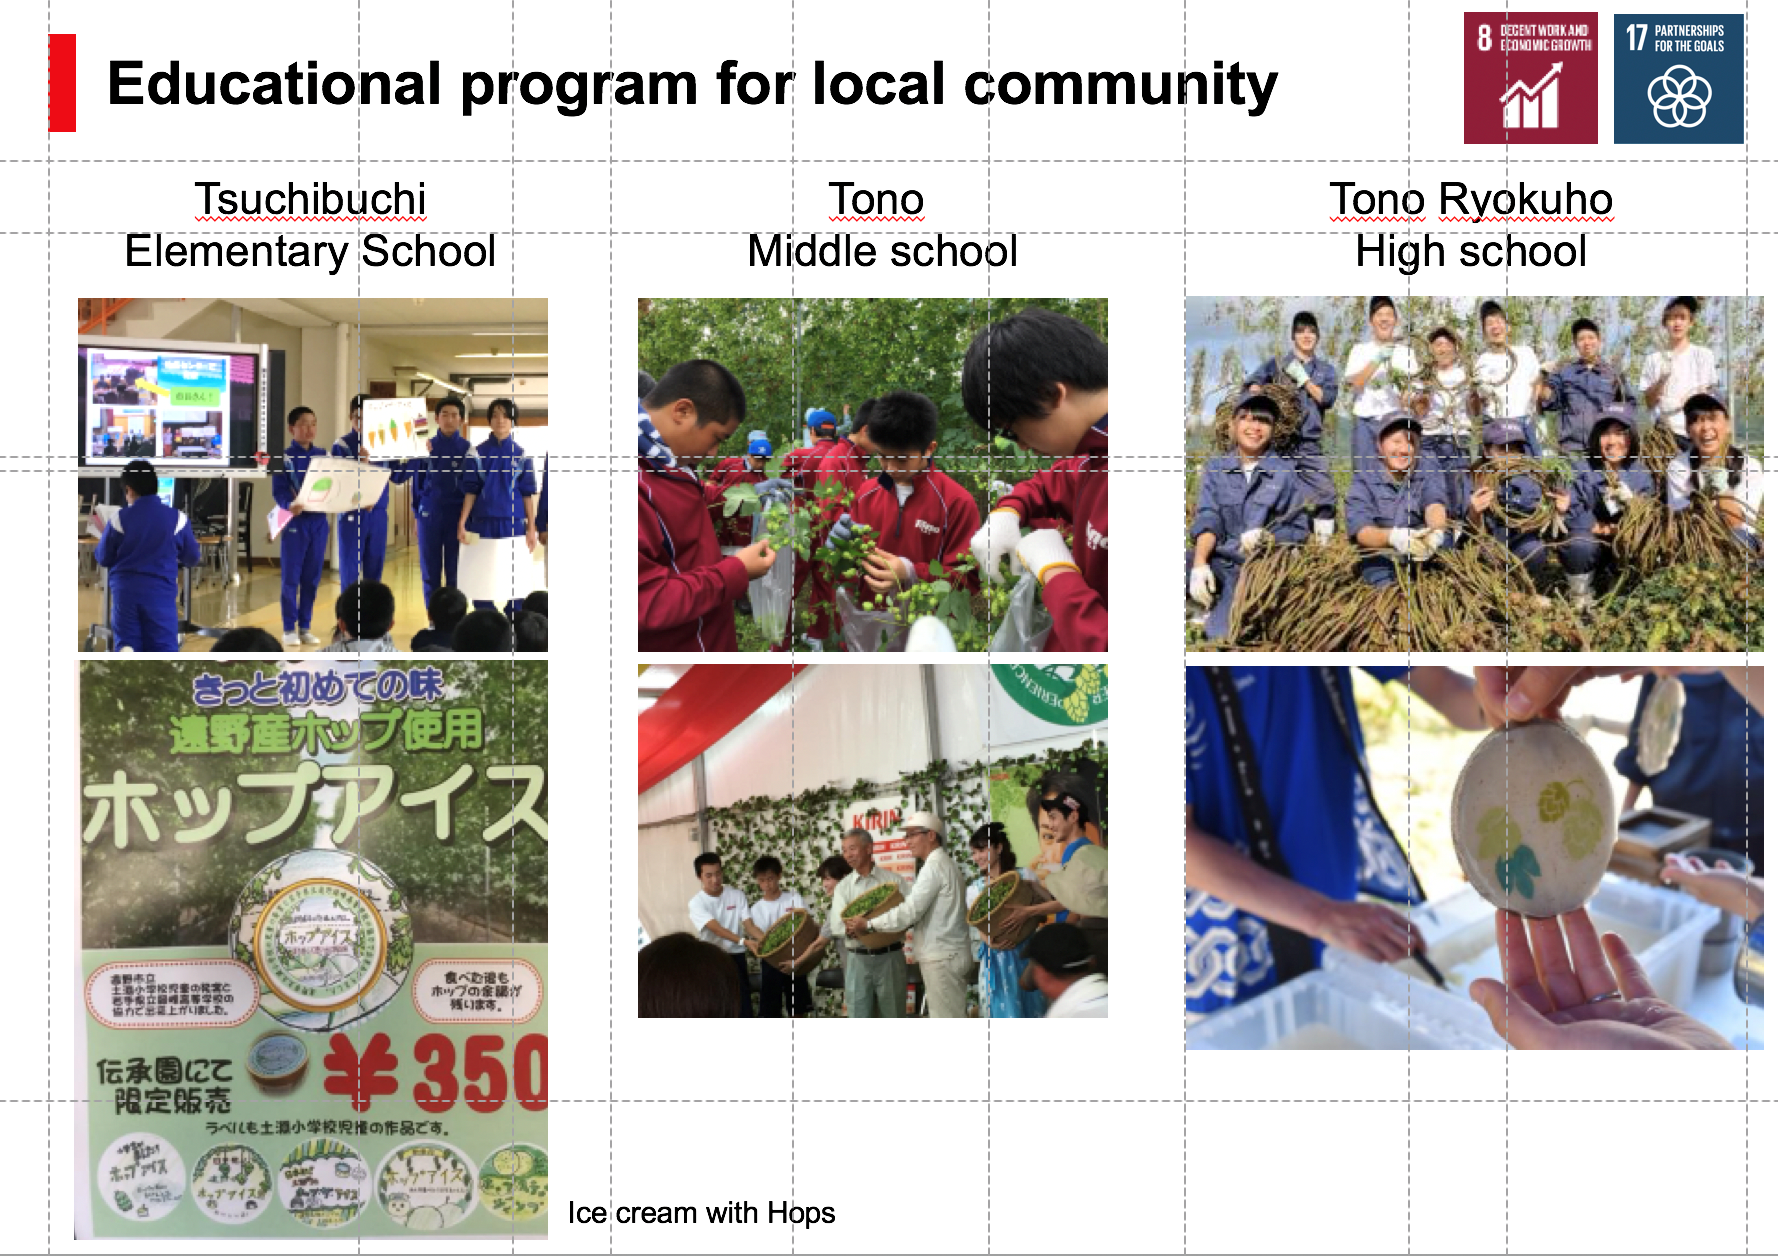 Japan domestic hops and community revitalization